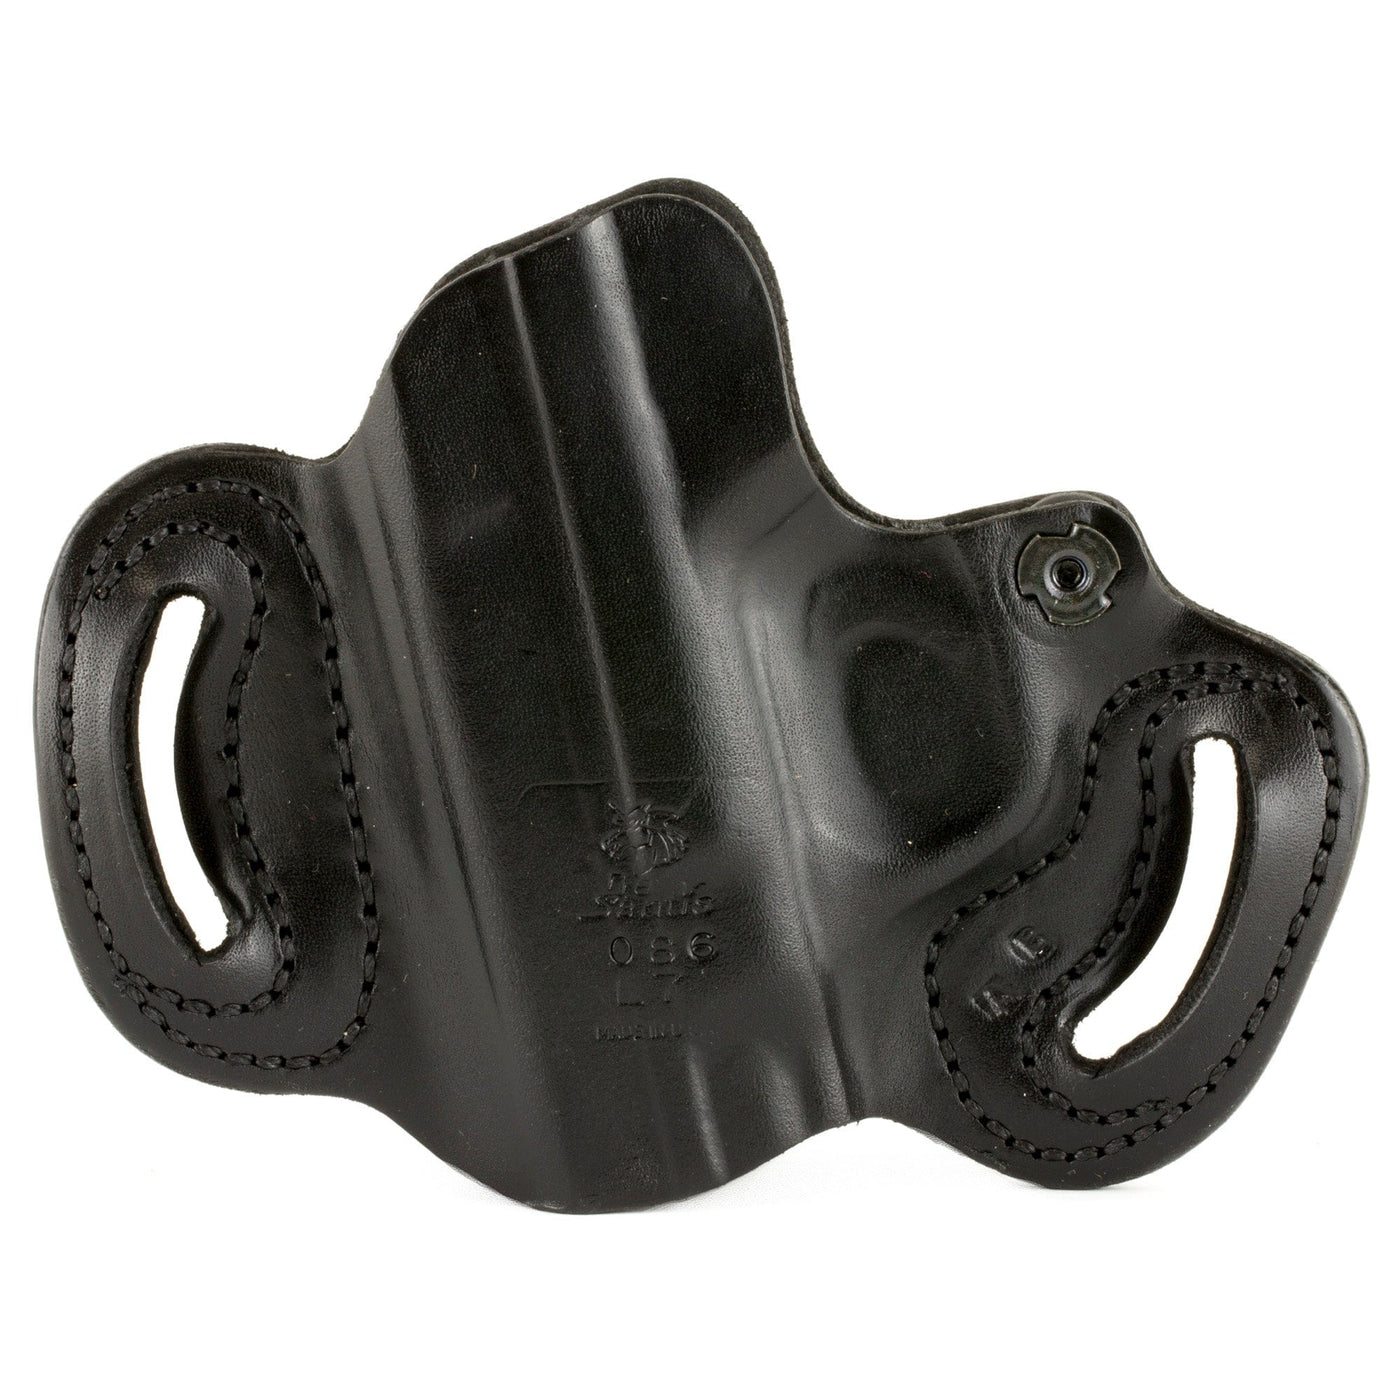 DeSantis Gunhide Desantis Mini Slide Holster - Owb Rh Leather M&p 9/40 Black Holsters